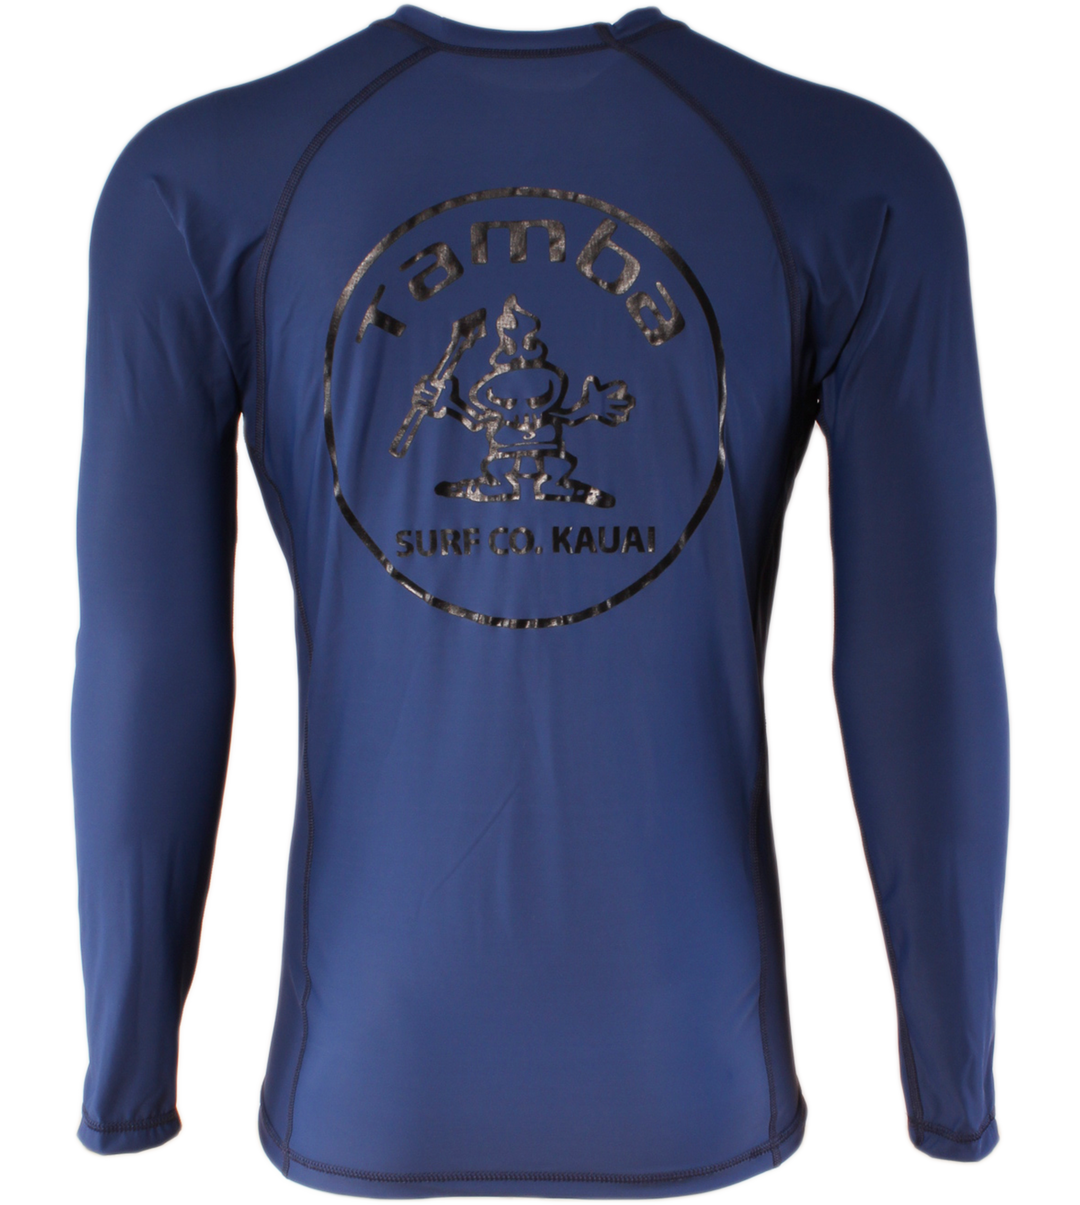 Stamp Rash Guard Long Sleeve Shirt - Navy